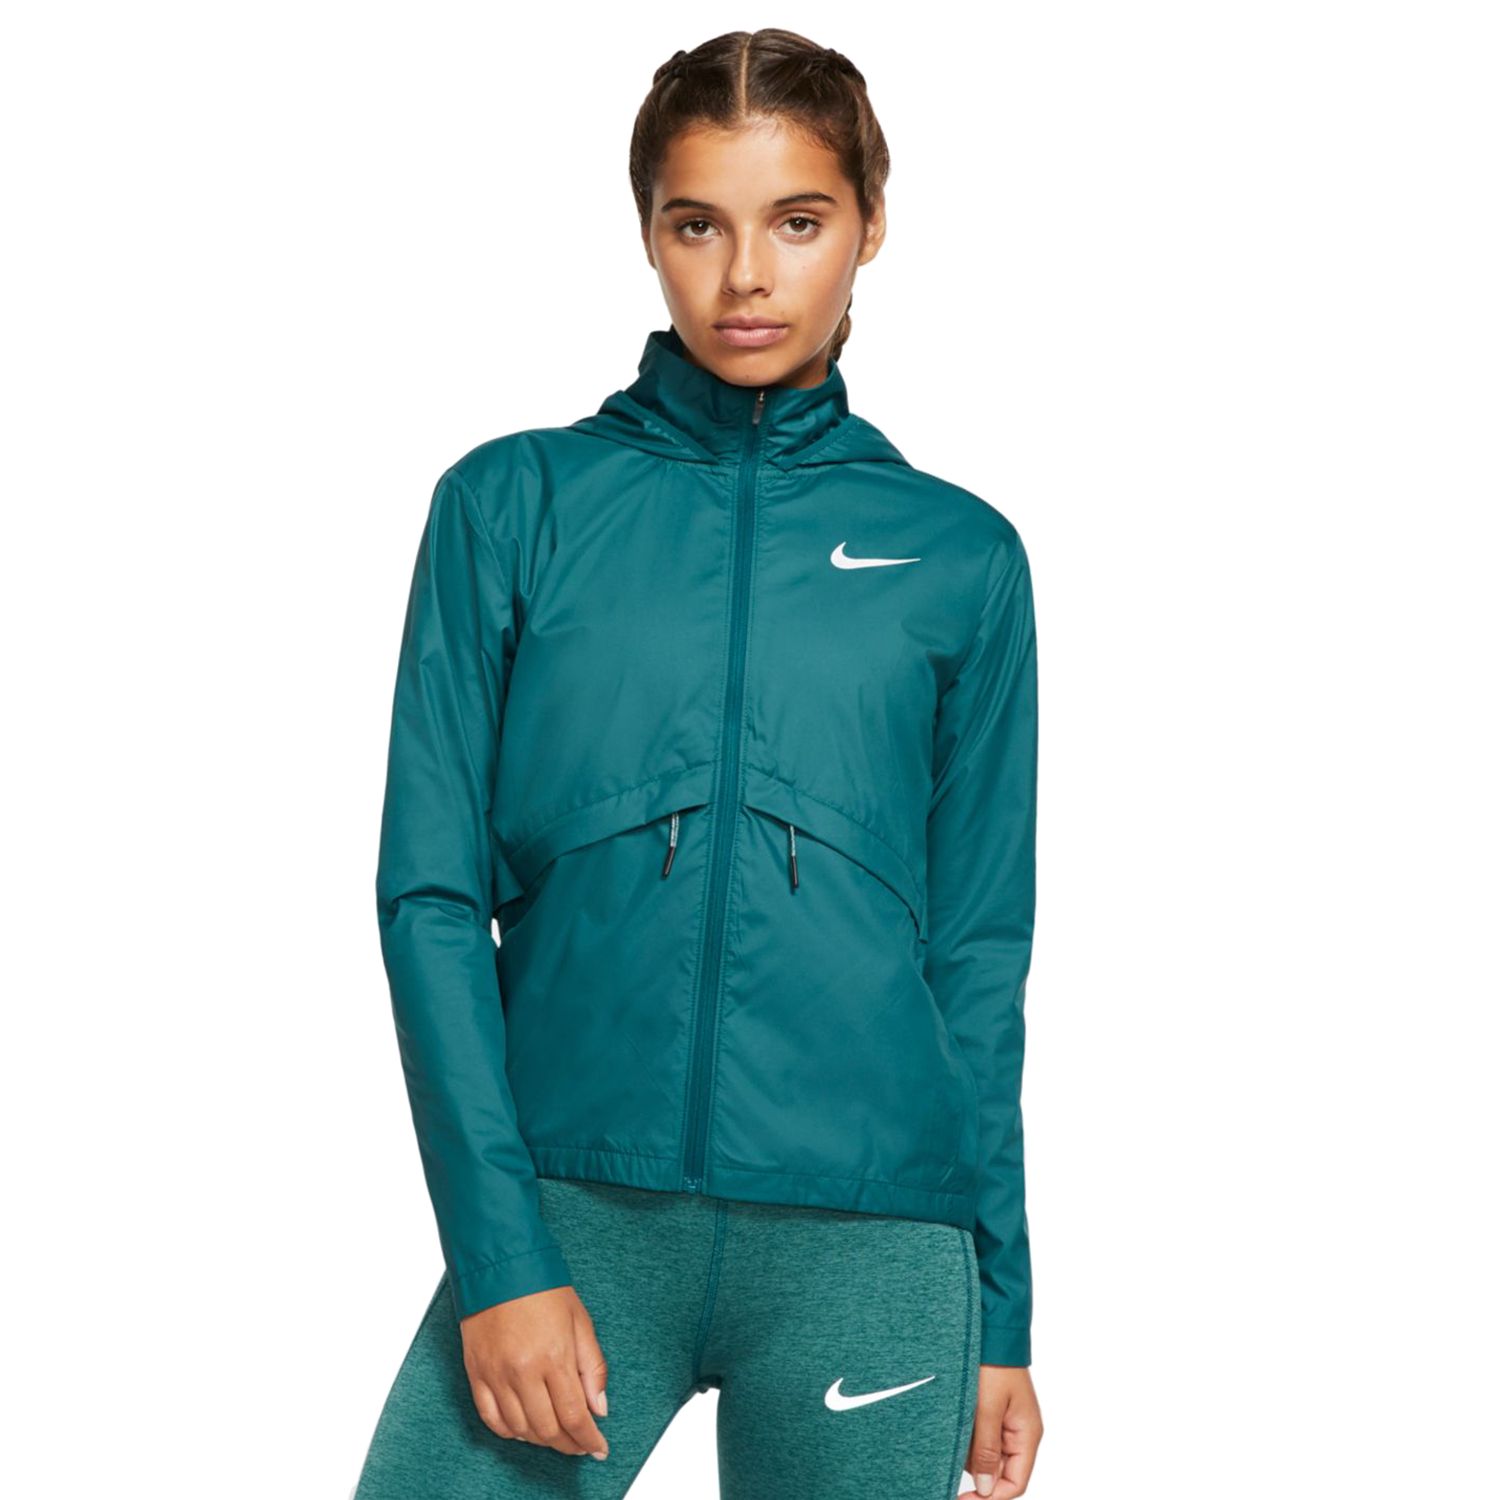 women's nike essential running jacket